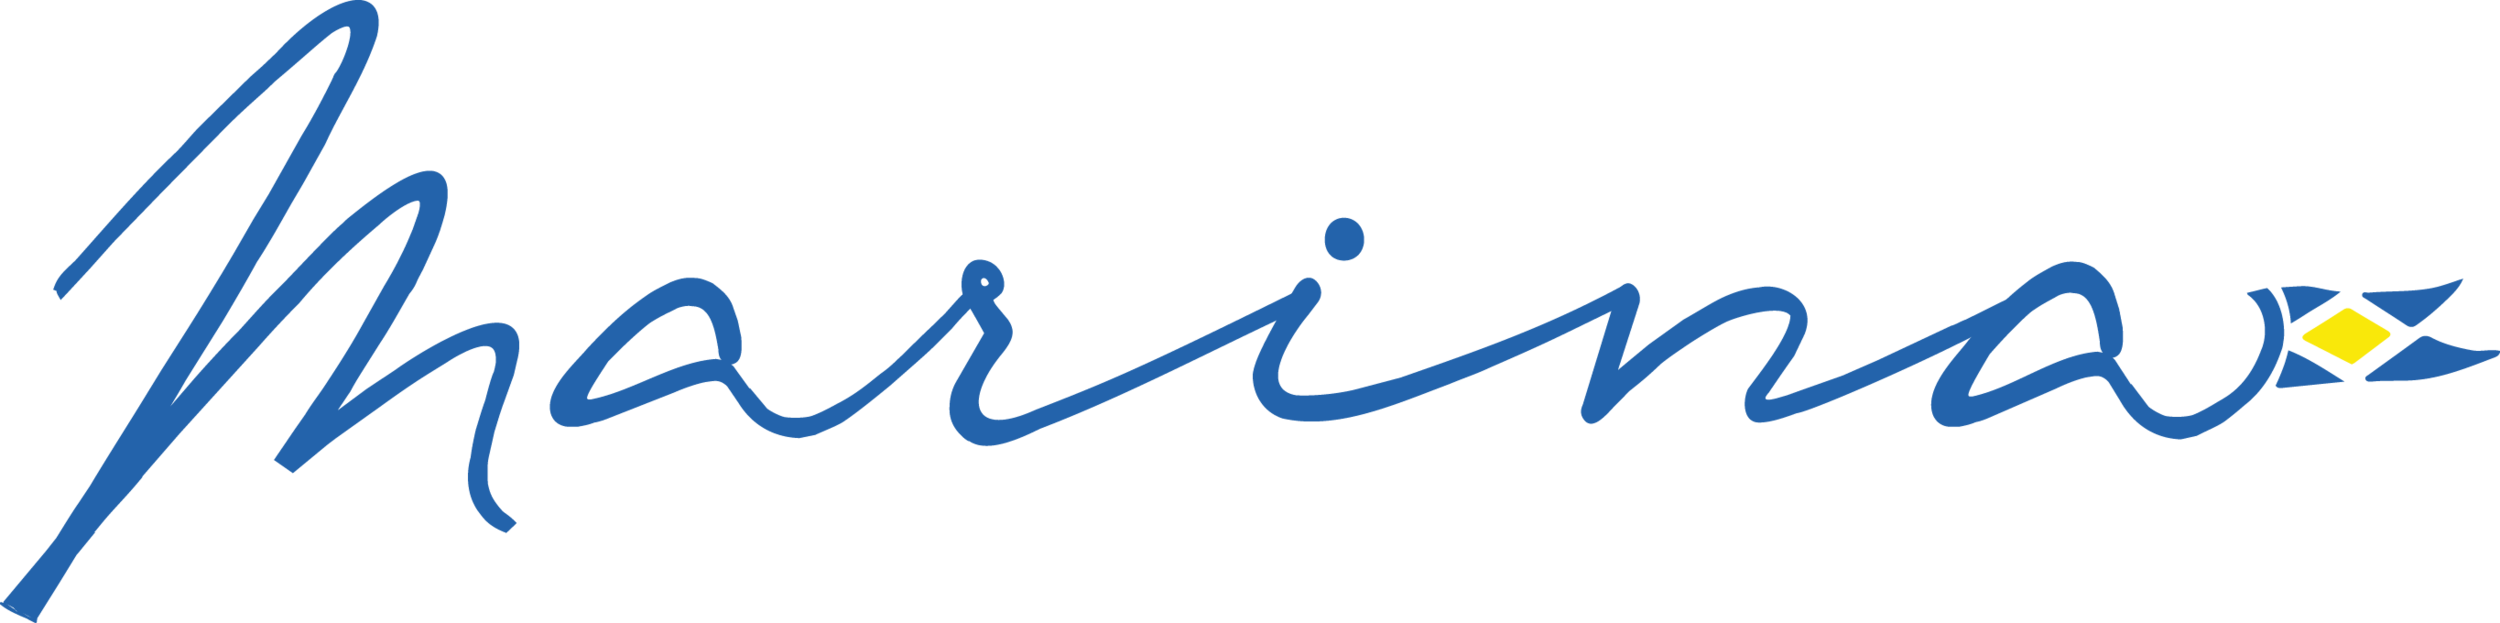 Final Marina Logo - Dark Blue.png